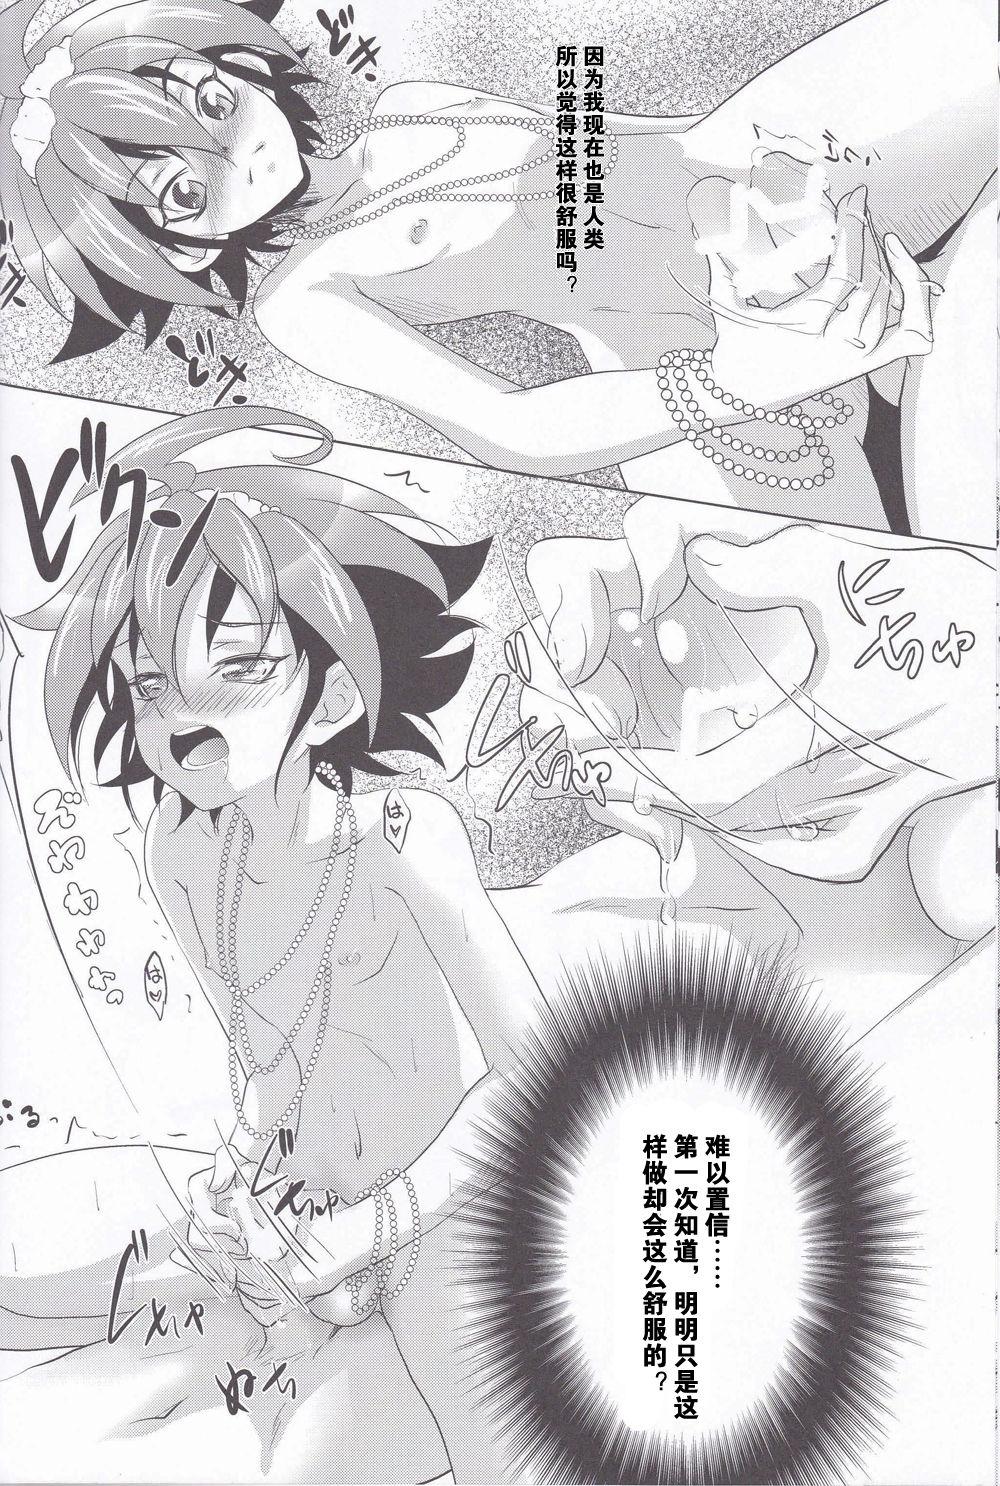 Whipping Mermaid Memory - Yu-gi-oh arc-v Mallu - Page 9